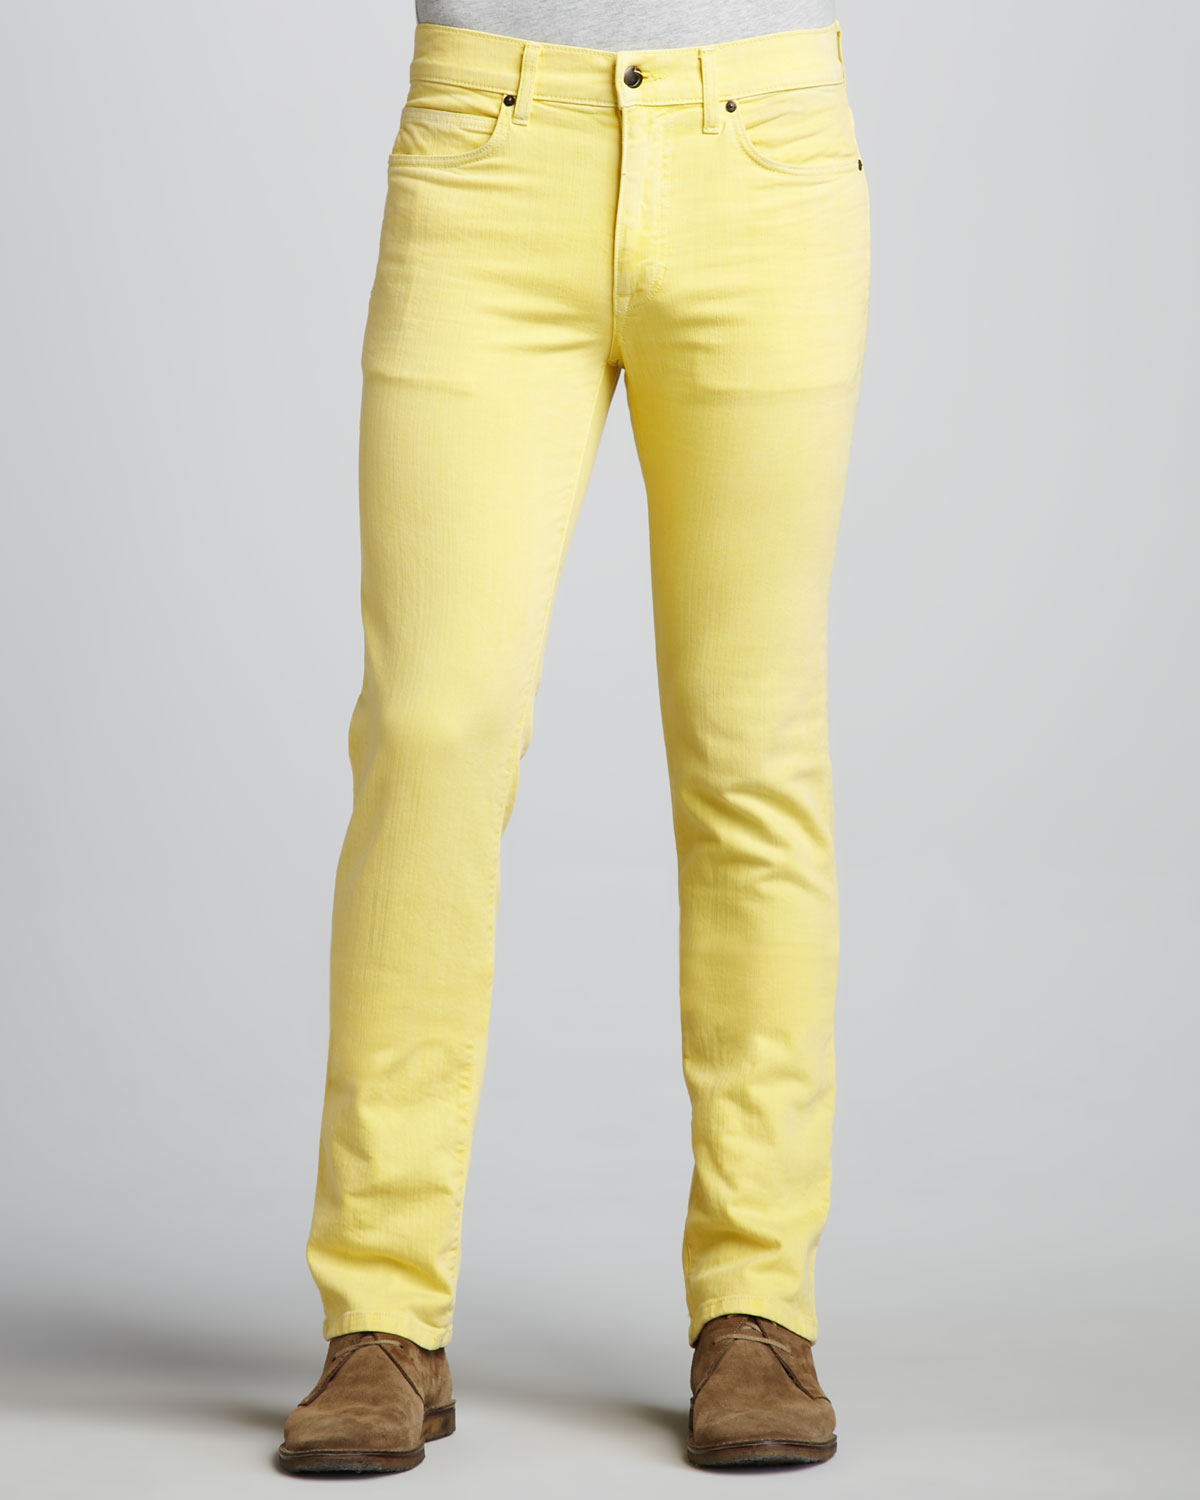 men's yellow jeans